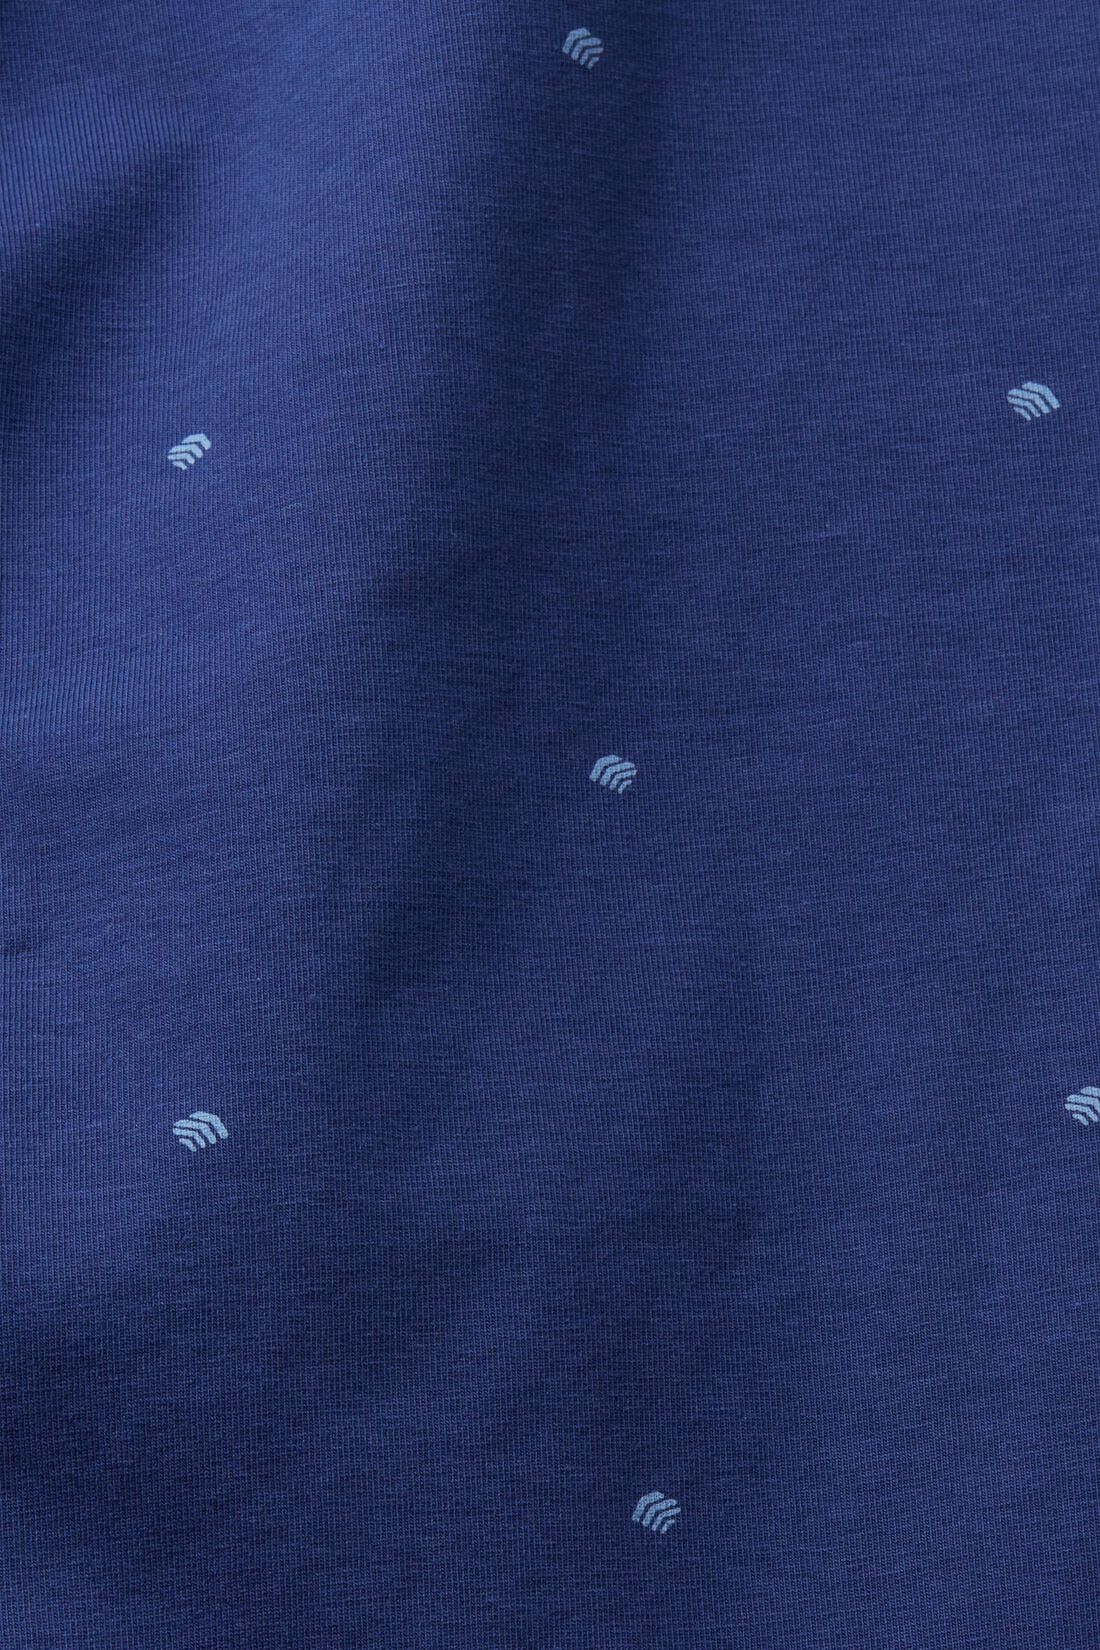 Esprit shortama korte mouw all-over print - Seasonal print co sus 033ER1Y320 - dark blue